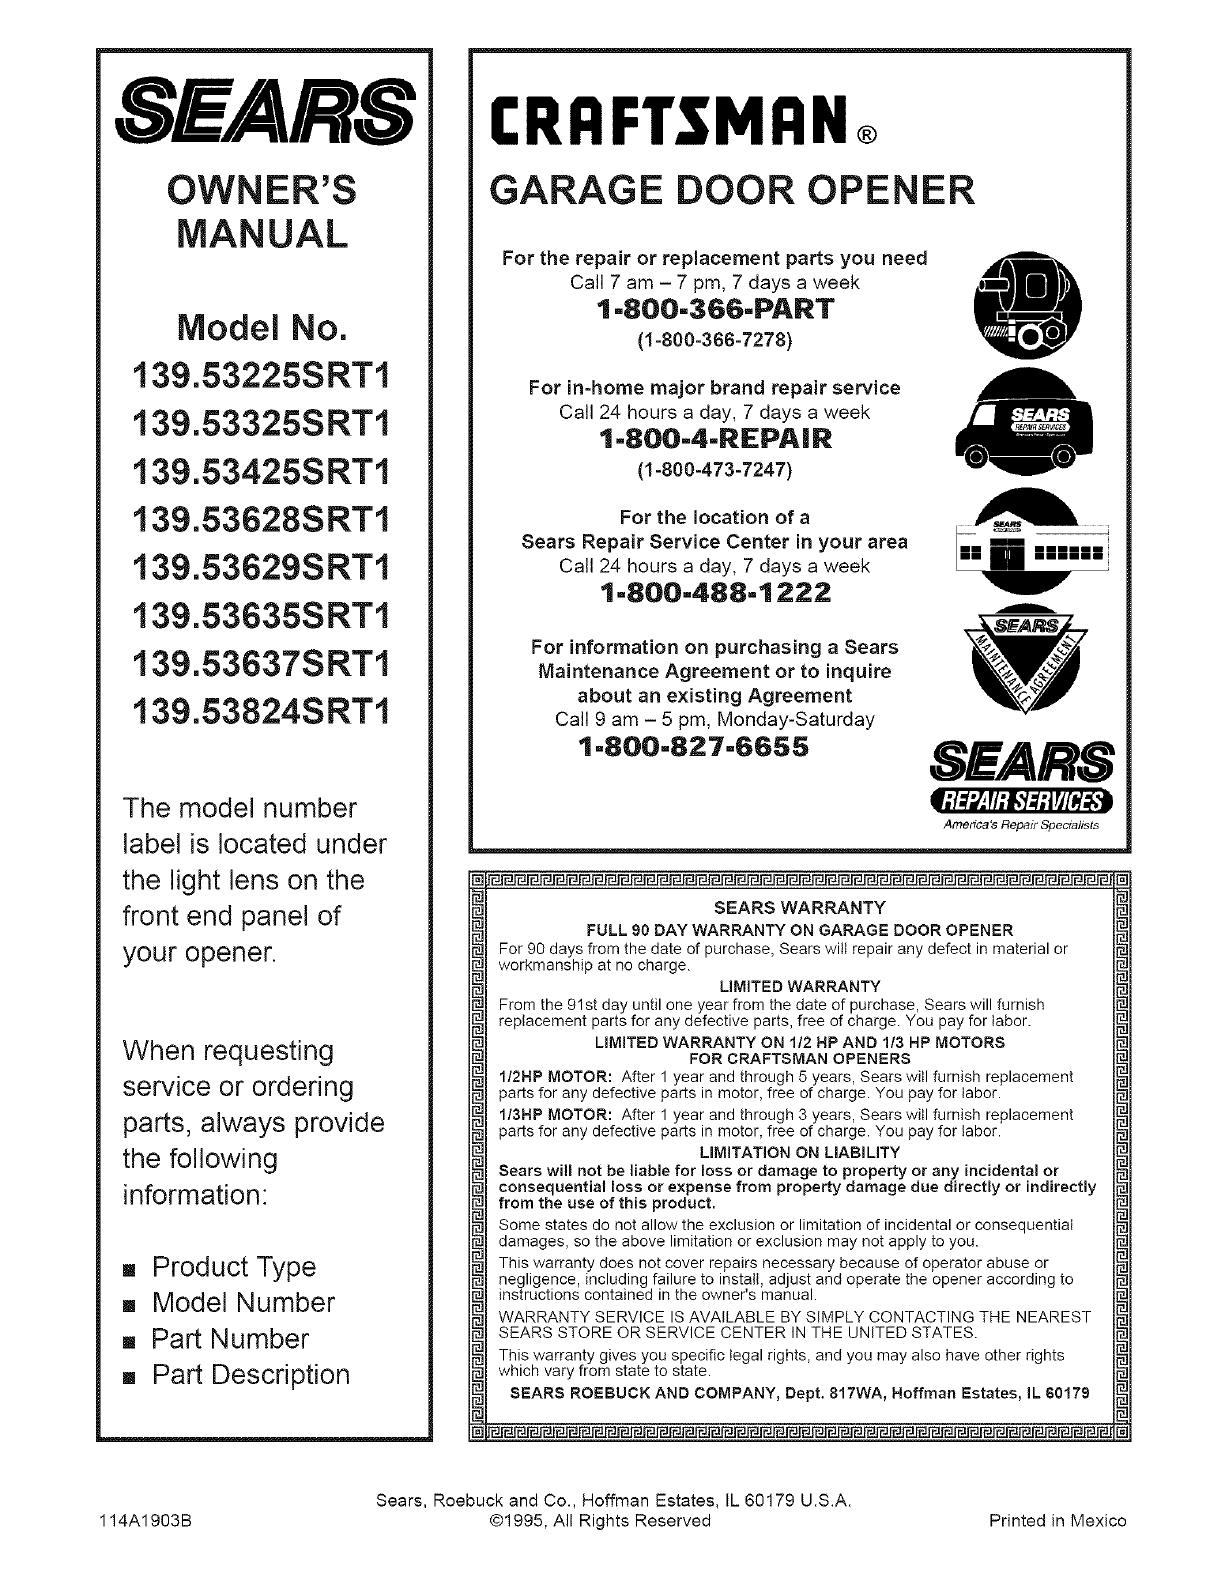 Sears Craftsman Garage Door Opener Owners Manual